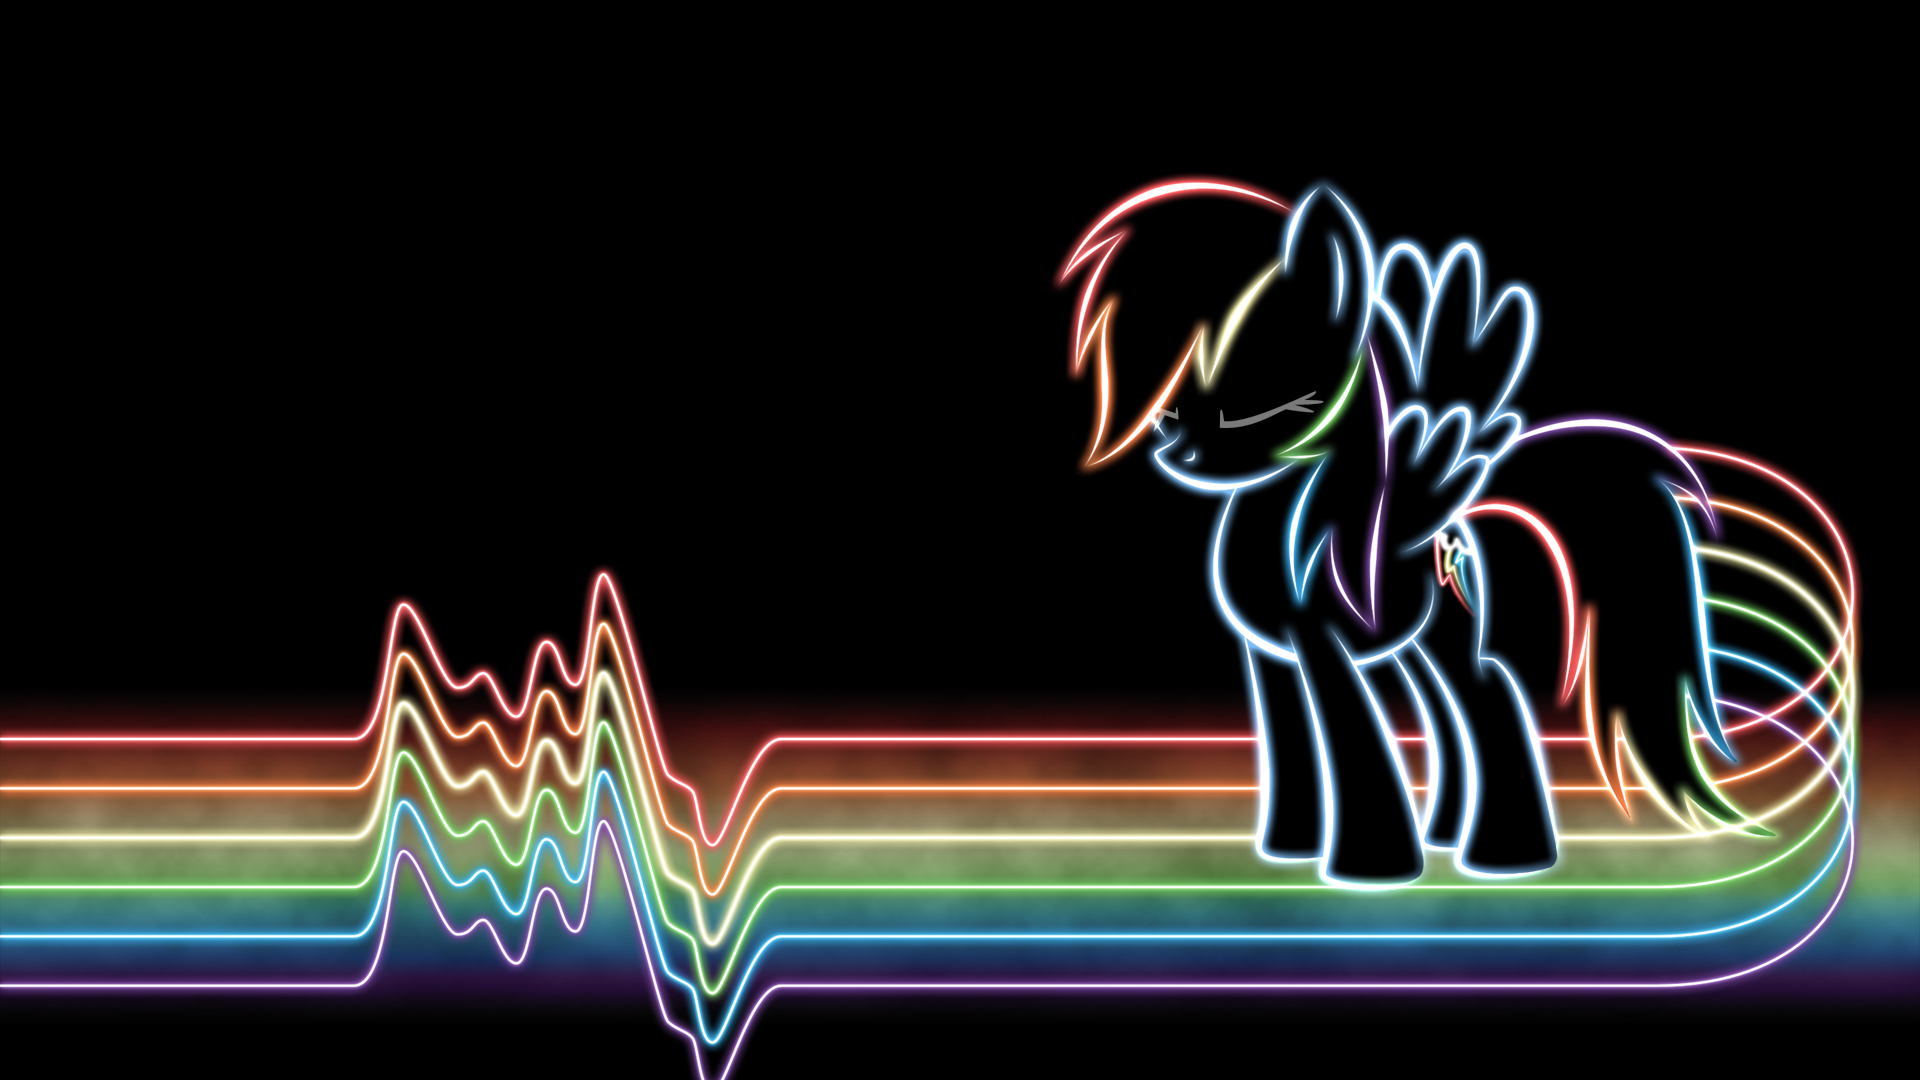 my little pony, tv show, my little pony: friendship is magic, rainbow dash